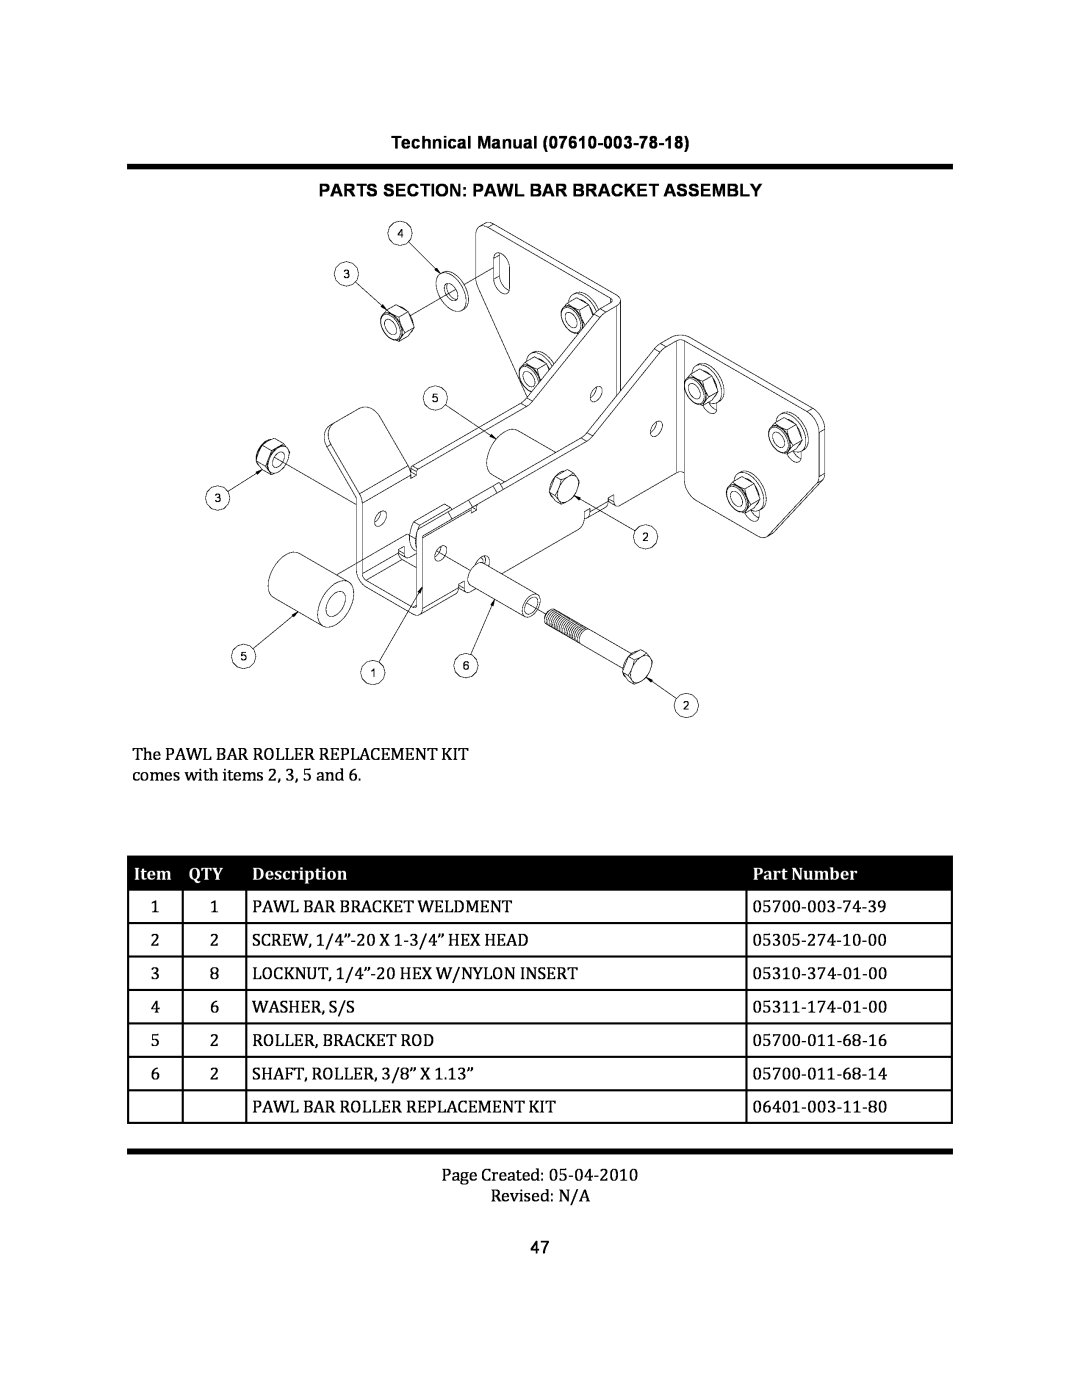 Jackson CREW 66S, CREW 44S manual Technical Manual PARTS SECTION PAWL BAR BRACKET ASSEMBLY, Description, Part Number 